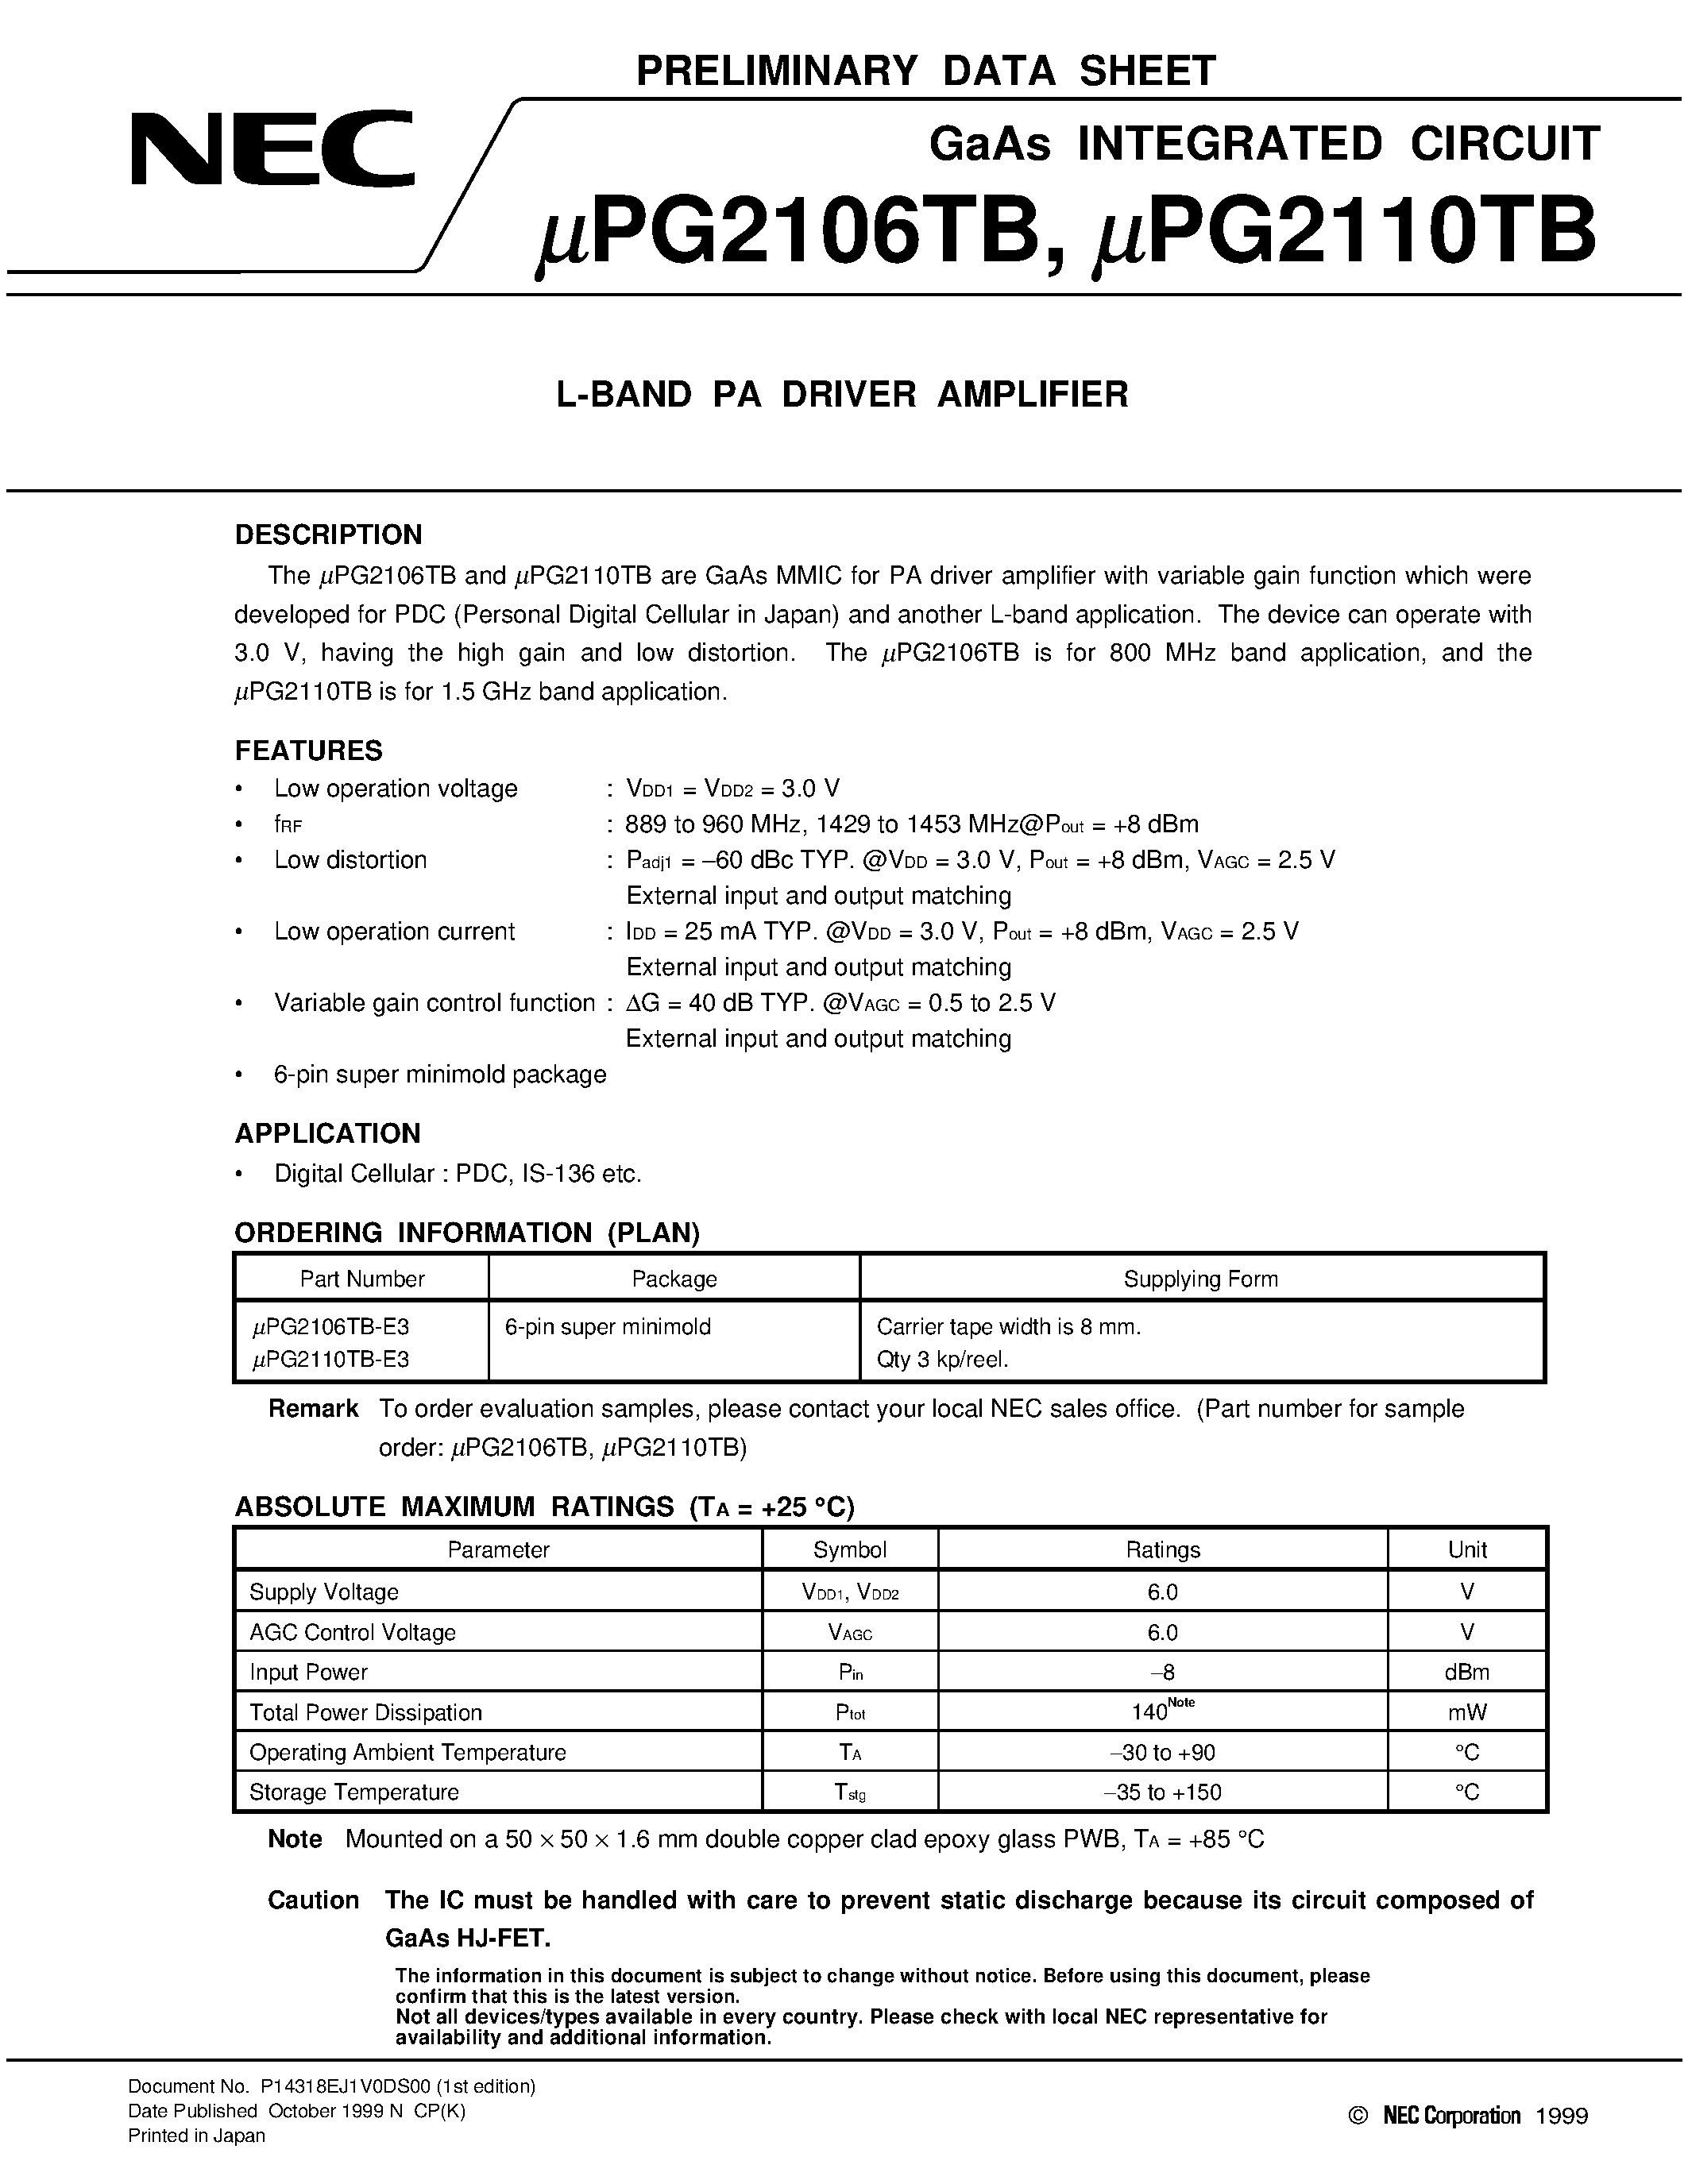 Datasheet UPG2106TB-E3 - L-BAND PA DRIVER AMPLIFIER page 1